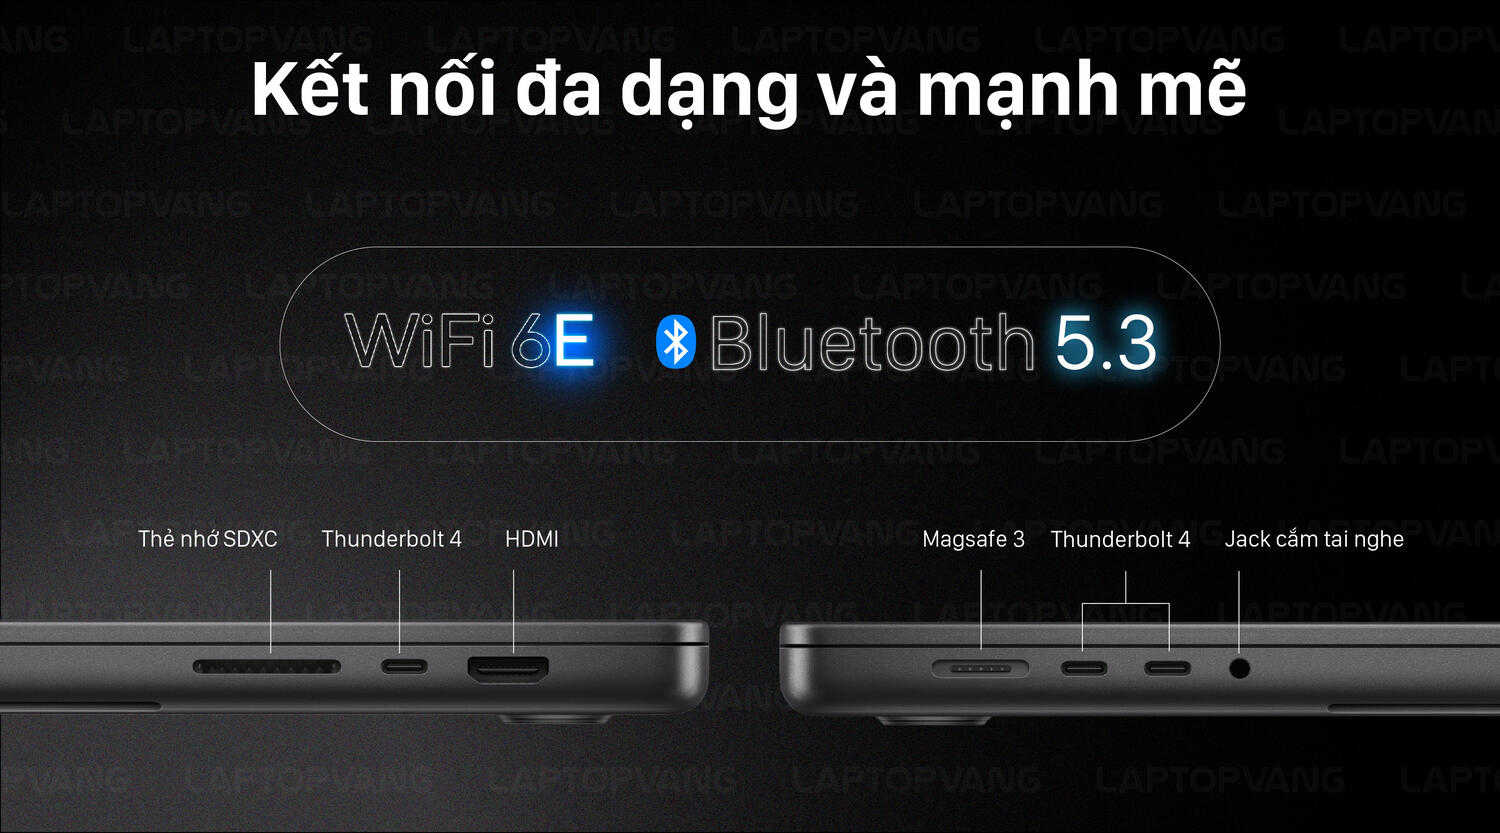 Wifi 6E & Bluetooth 5.3